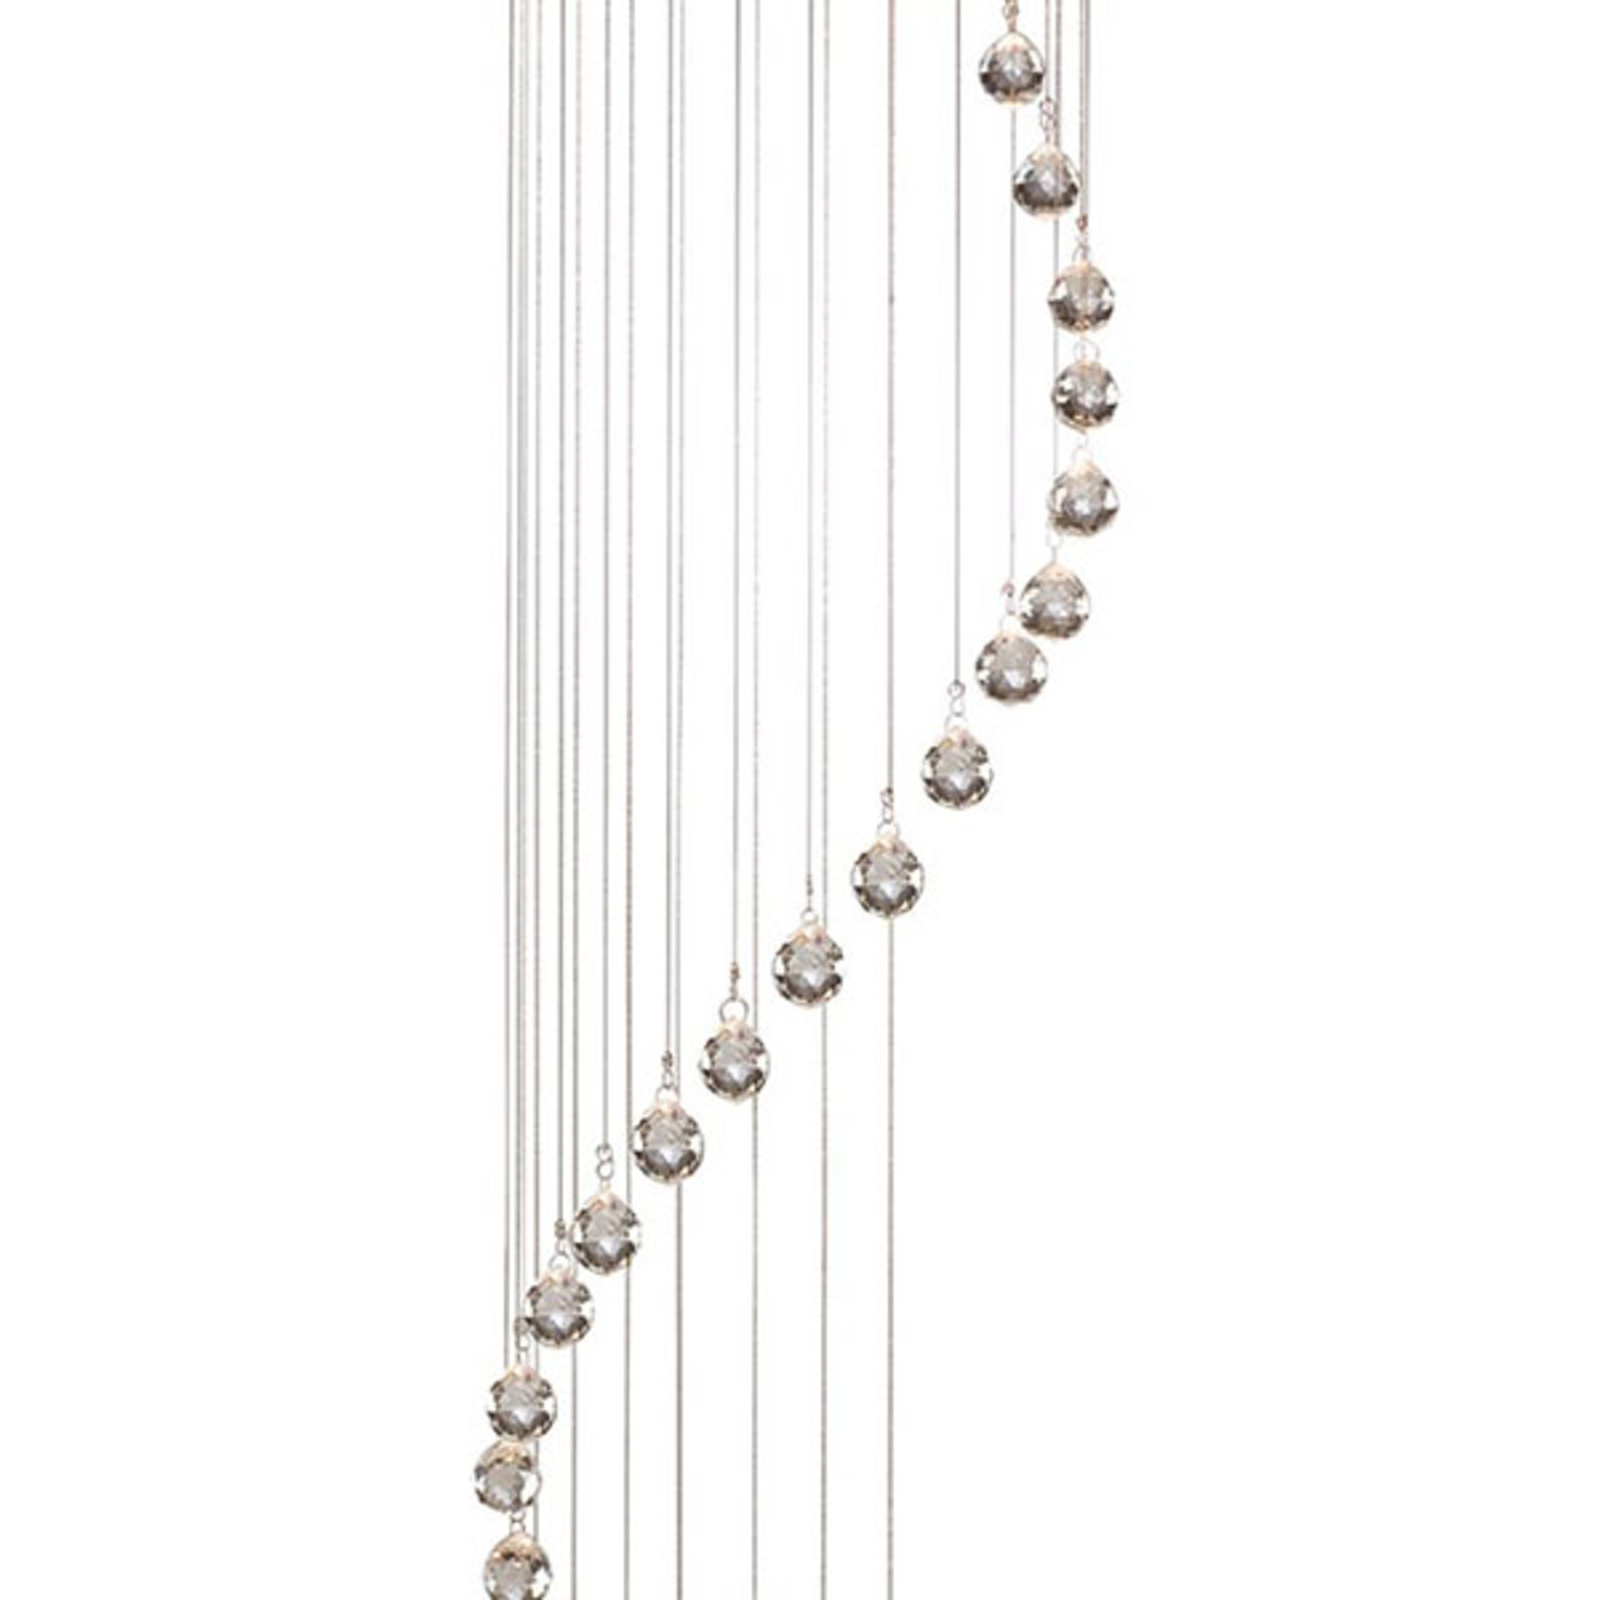 Hanglamp Hallway met kristalbezetting, 180 cm